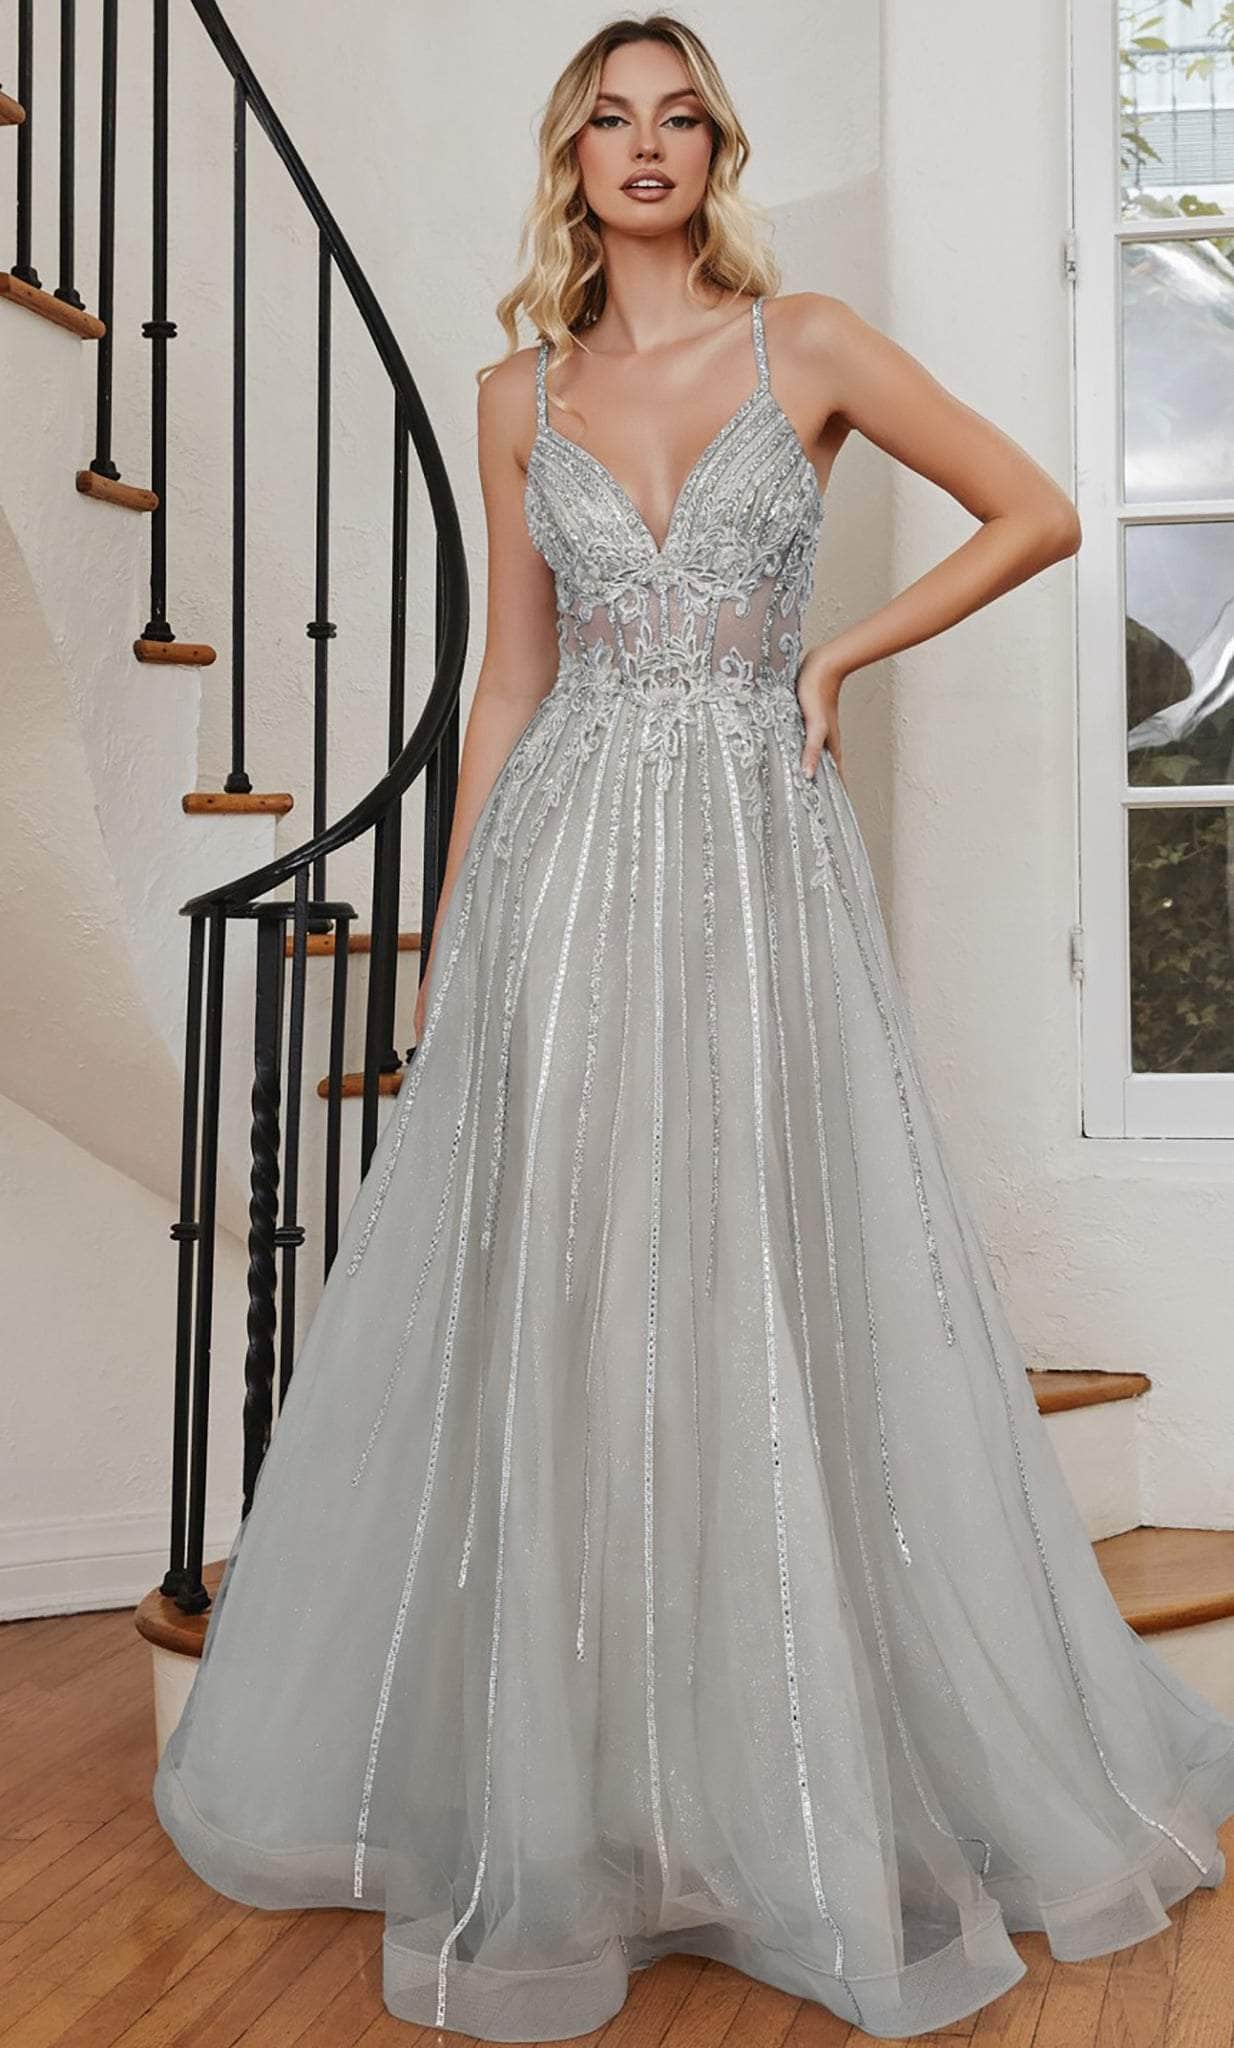 Ladivine CD994 - Applique A-Line Prom Dress Prom Dresses 4 / Silver-